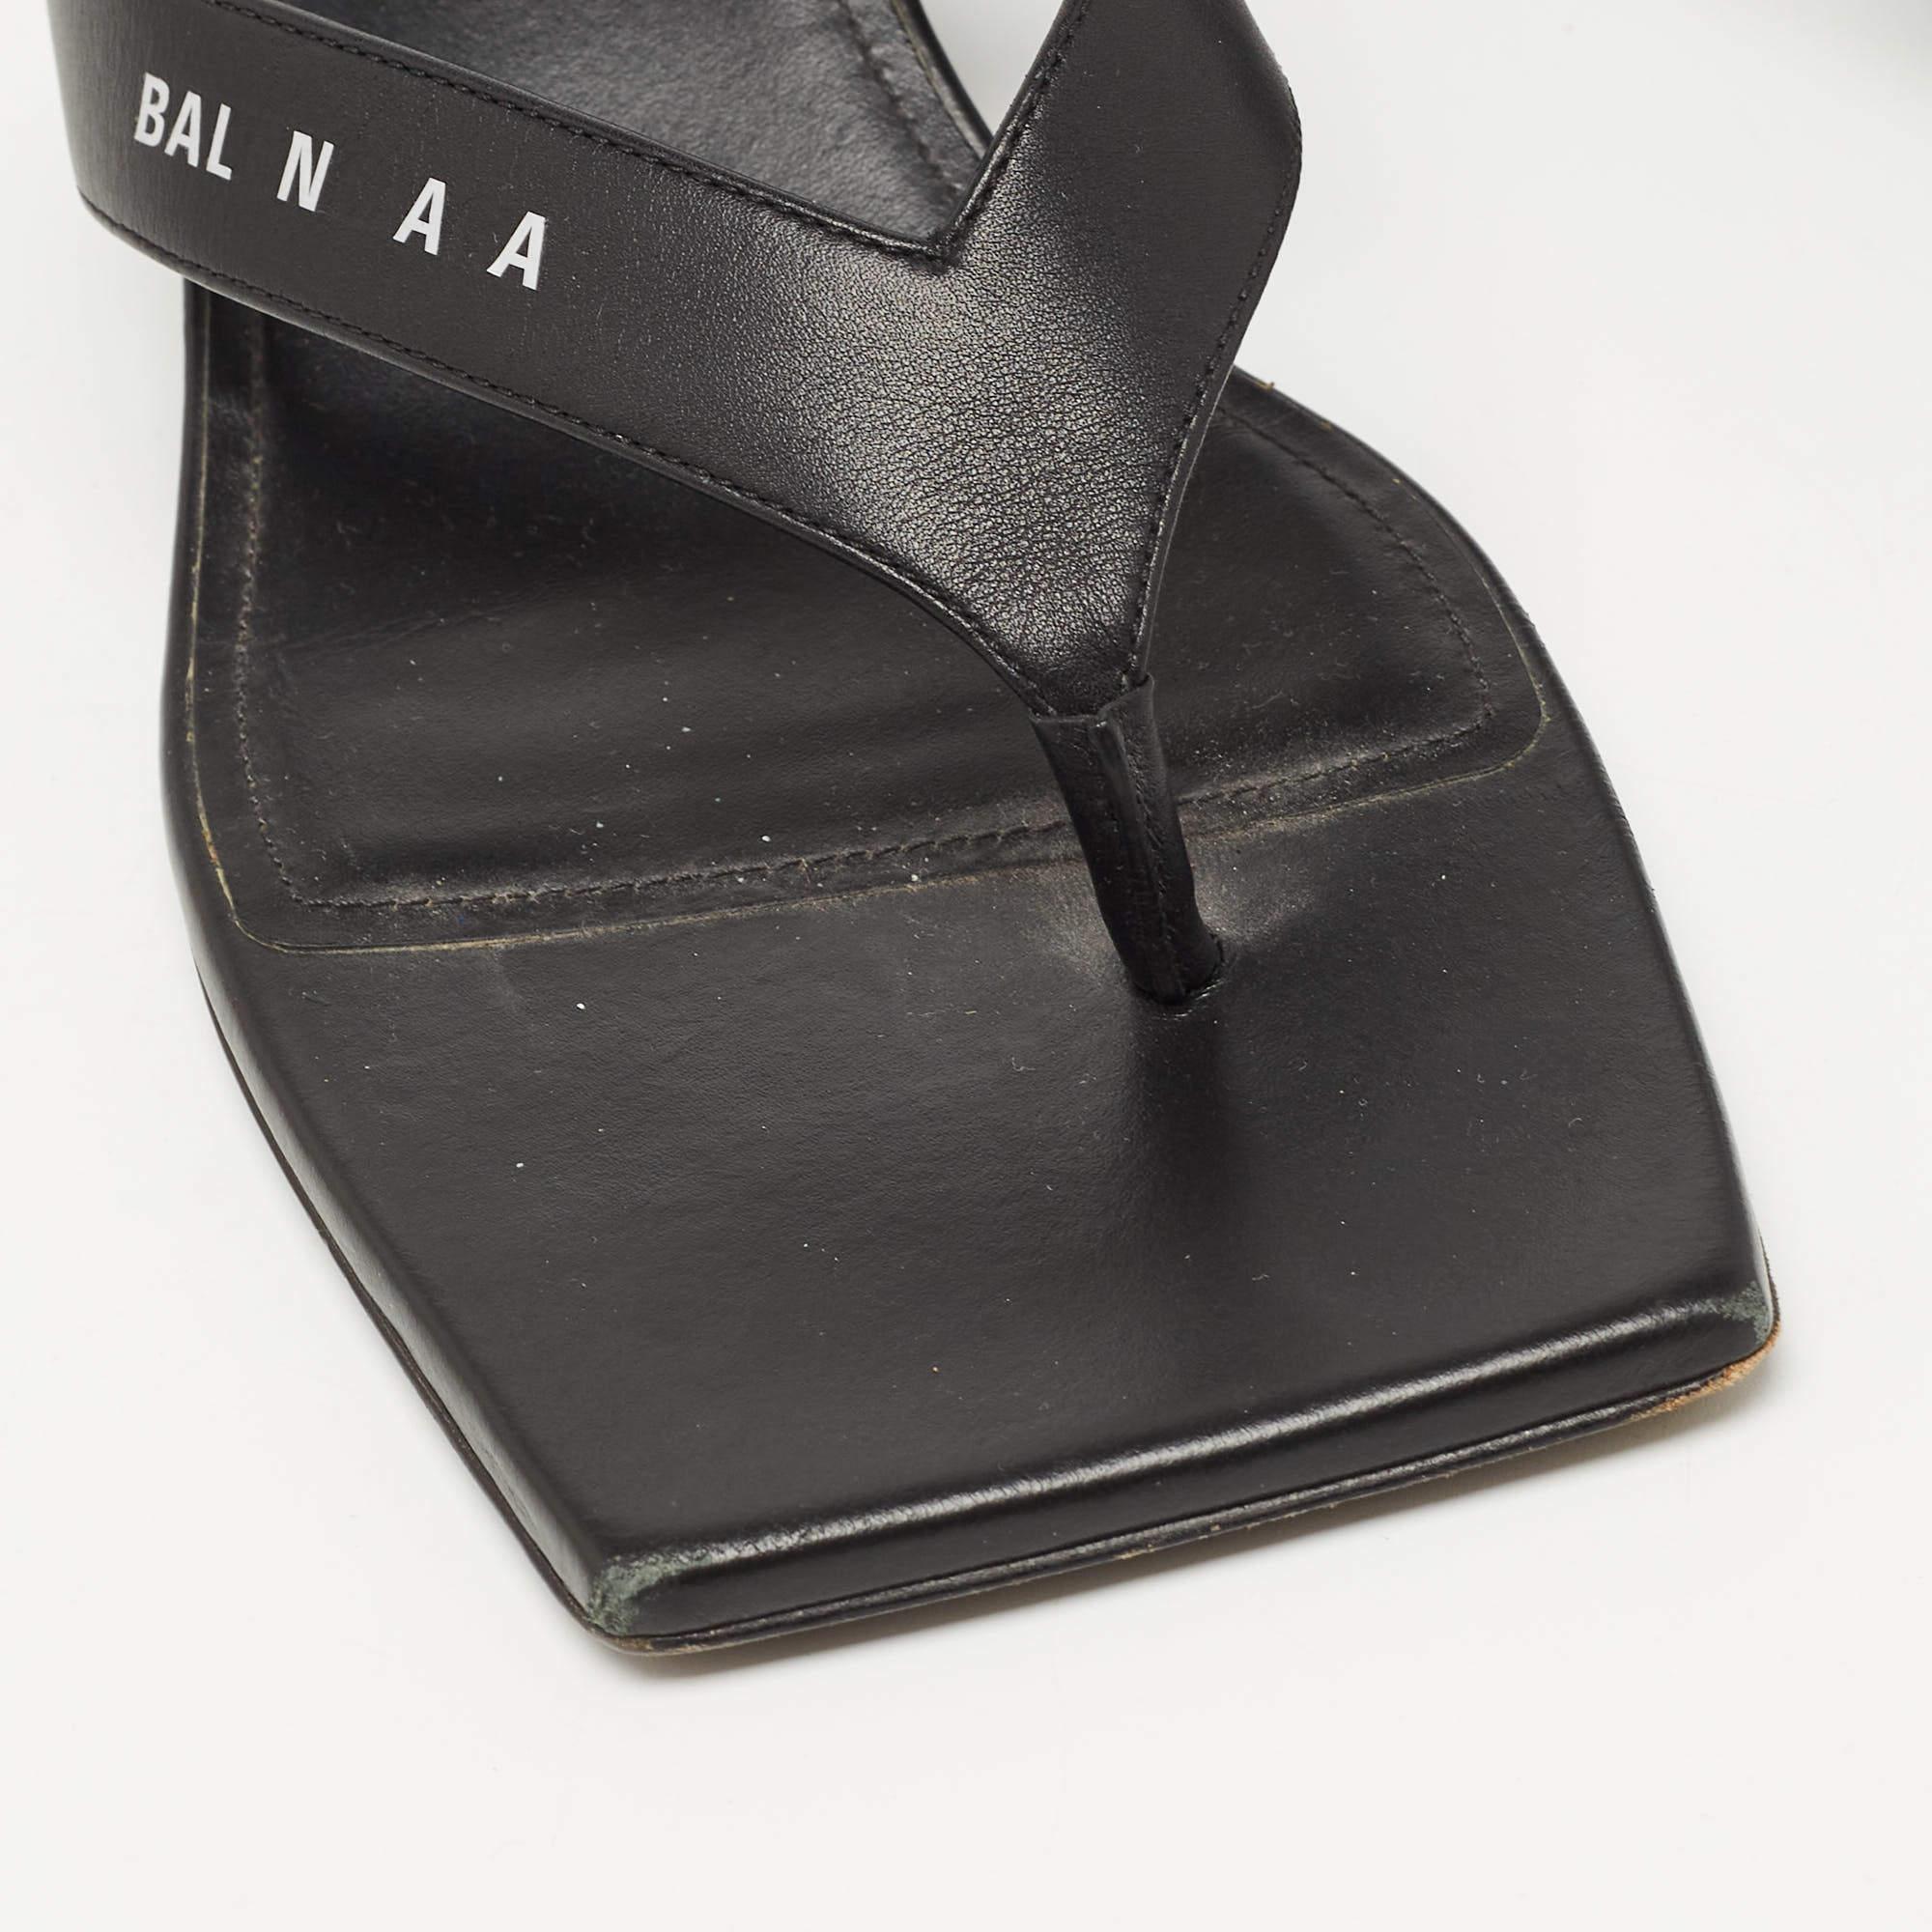 Balenciaga Black Leather Square Toe Thong Slide Sandals Size 39 1